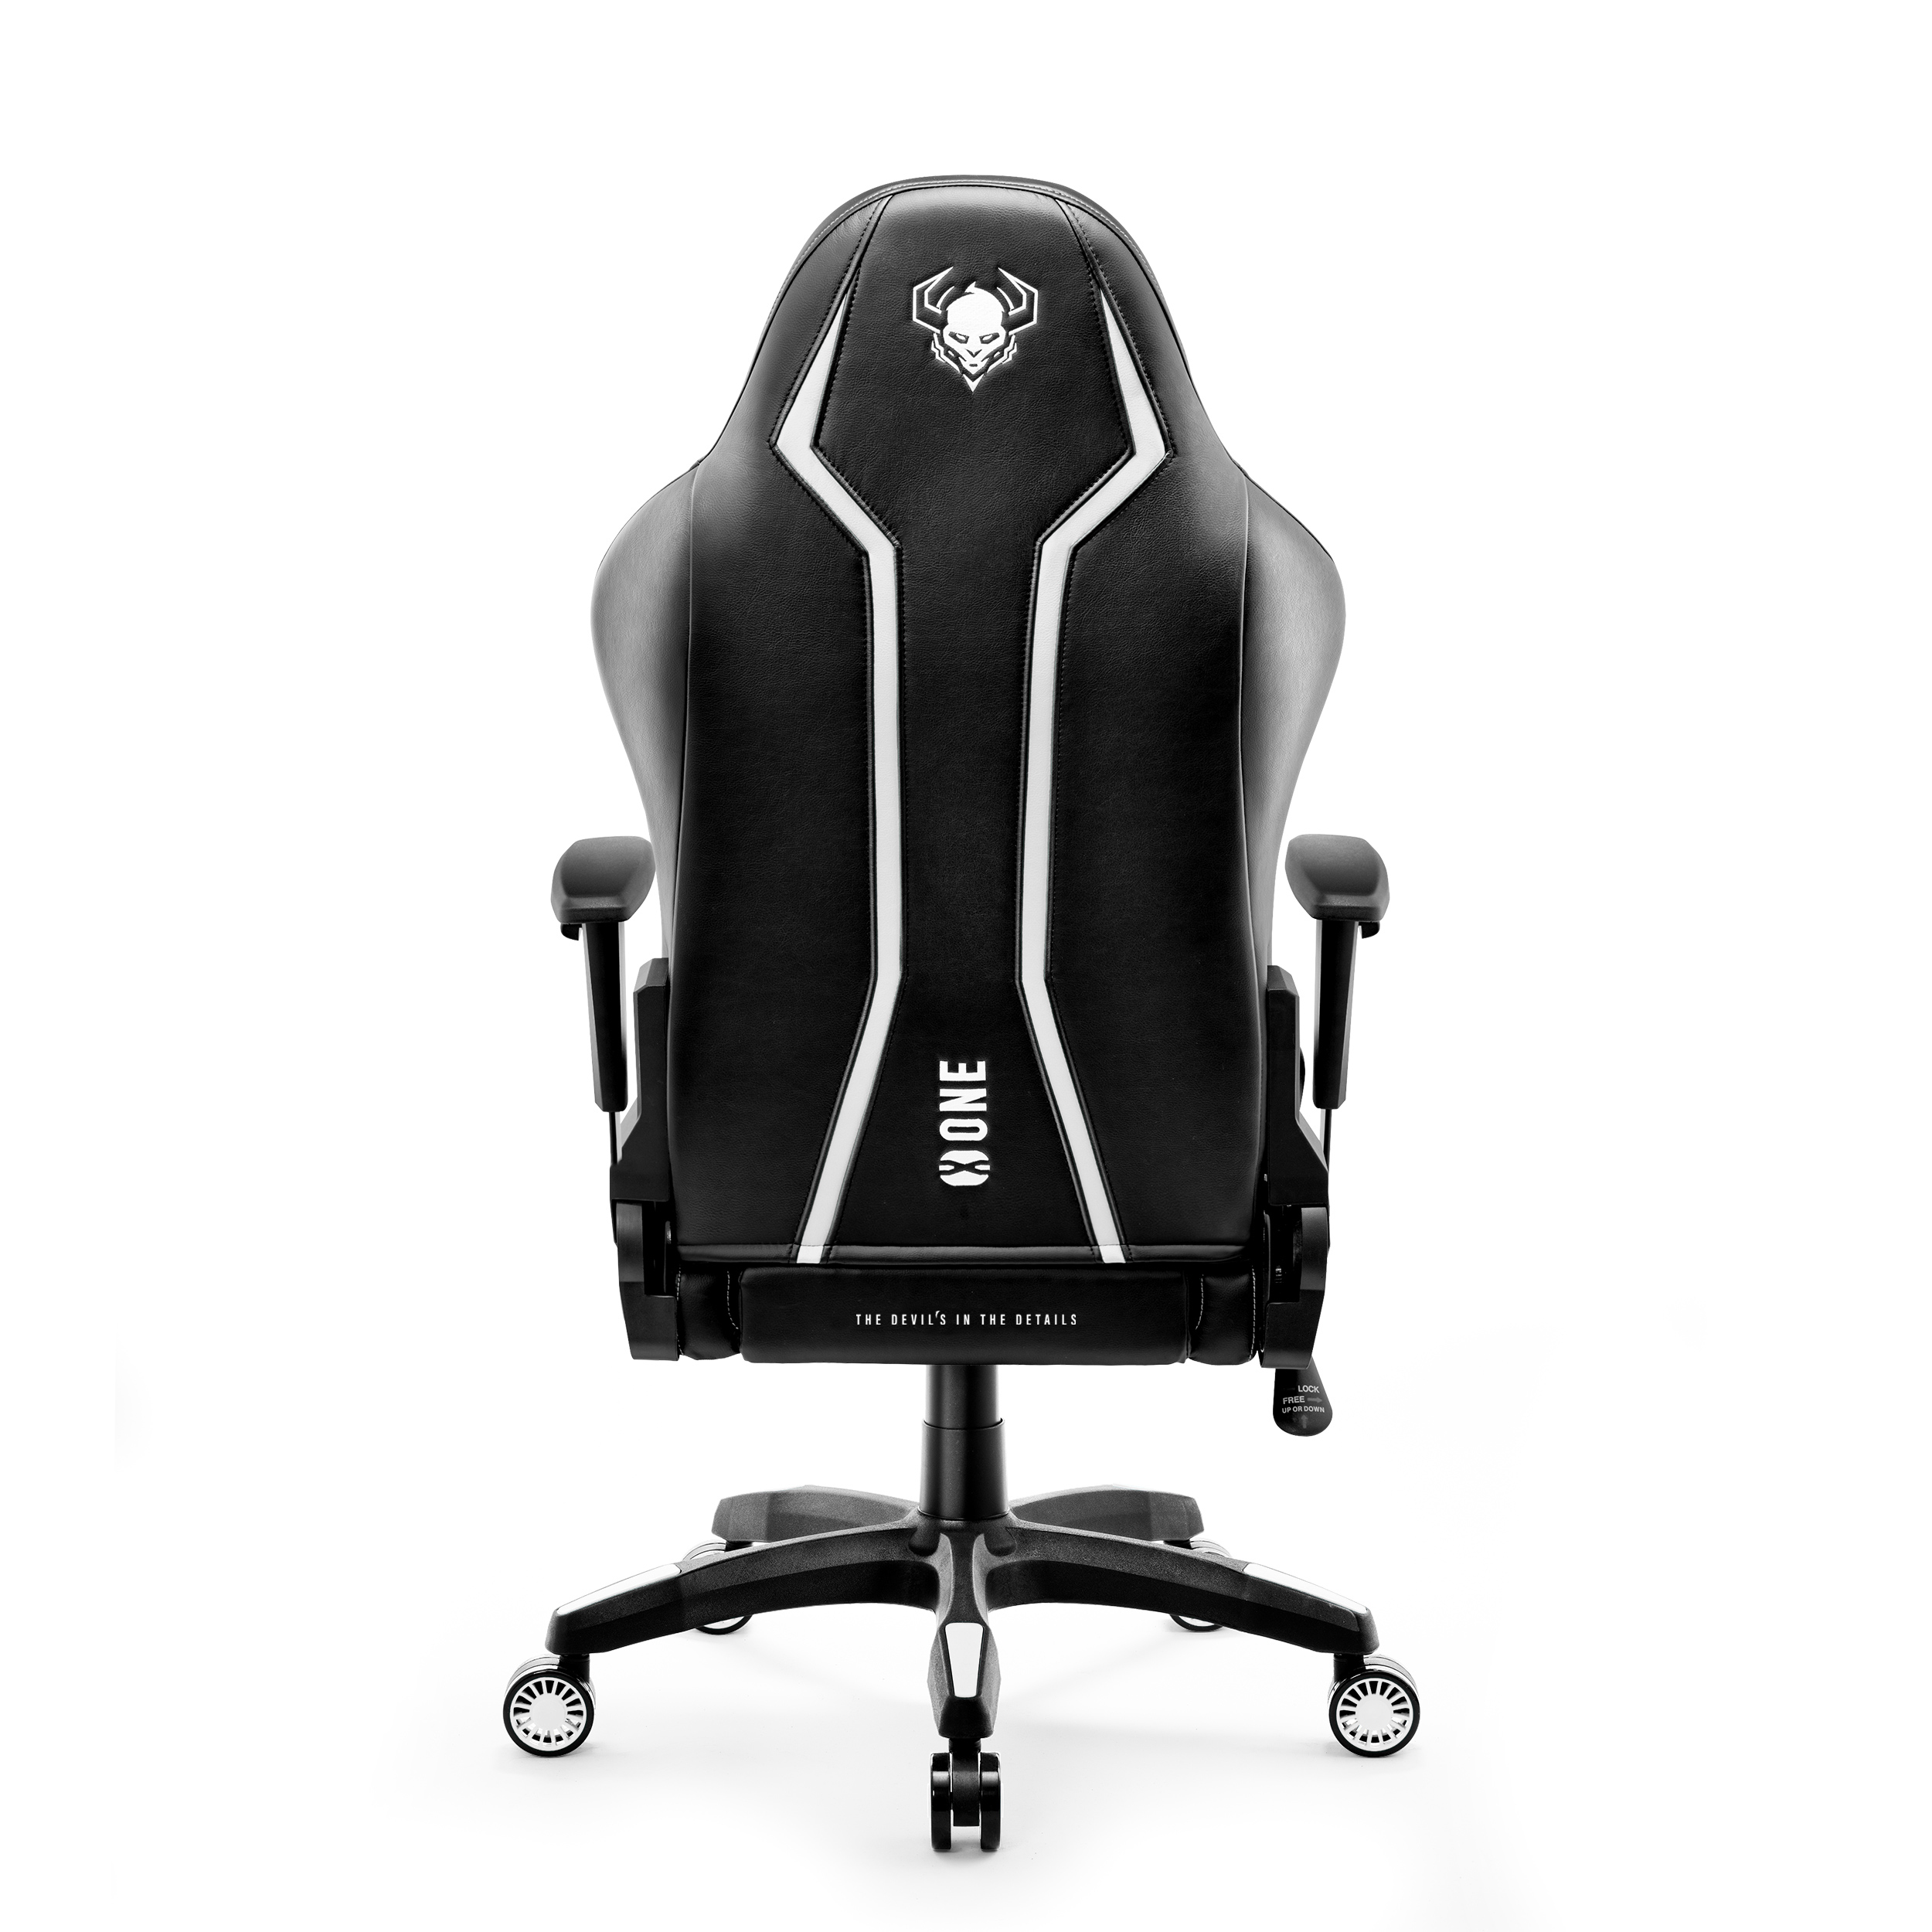 STUHL GAMING NORMAL Chair, CHAIRS black/white 2.0 DIABLO Gaming X-ONE